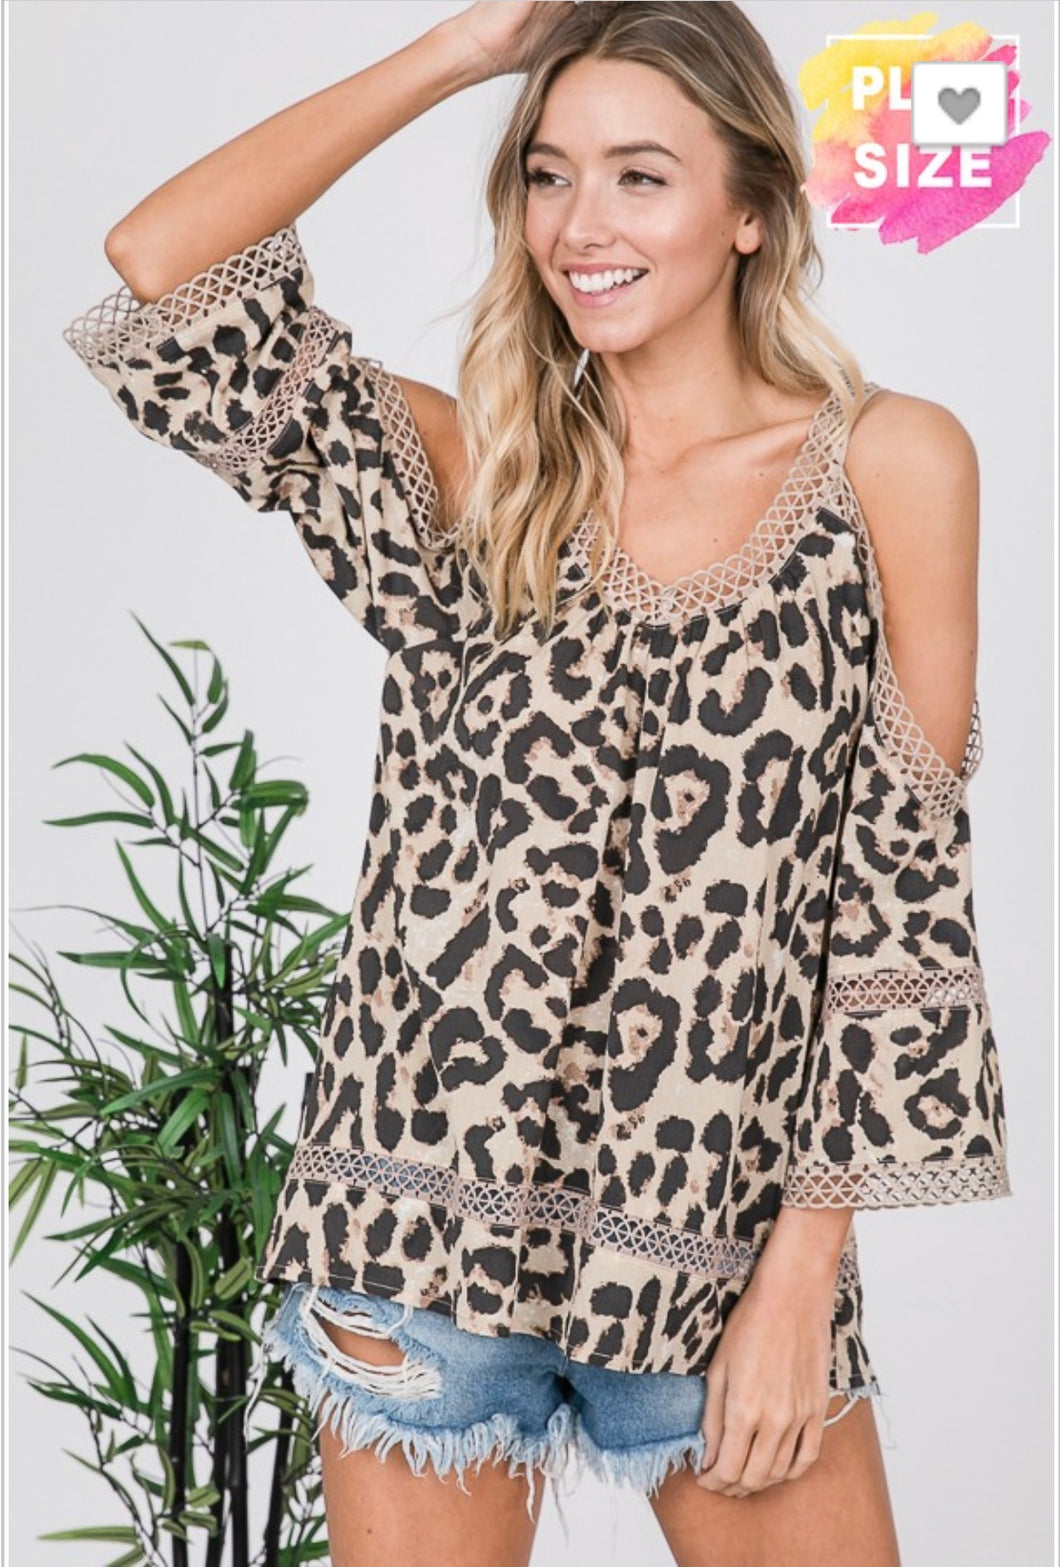 Super Cute Curvy size Cold Shoulder top!  Feel the Leopard ROAR!